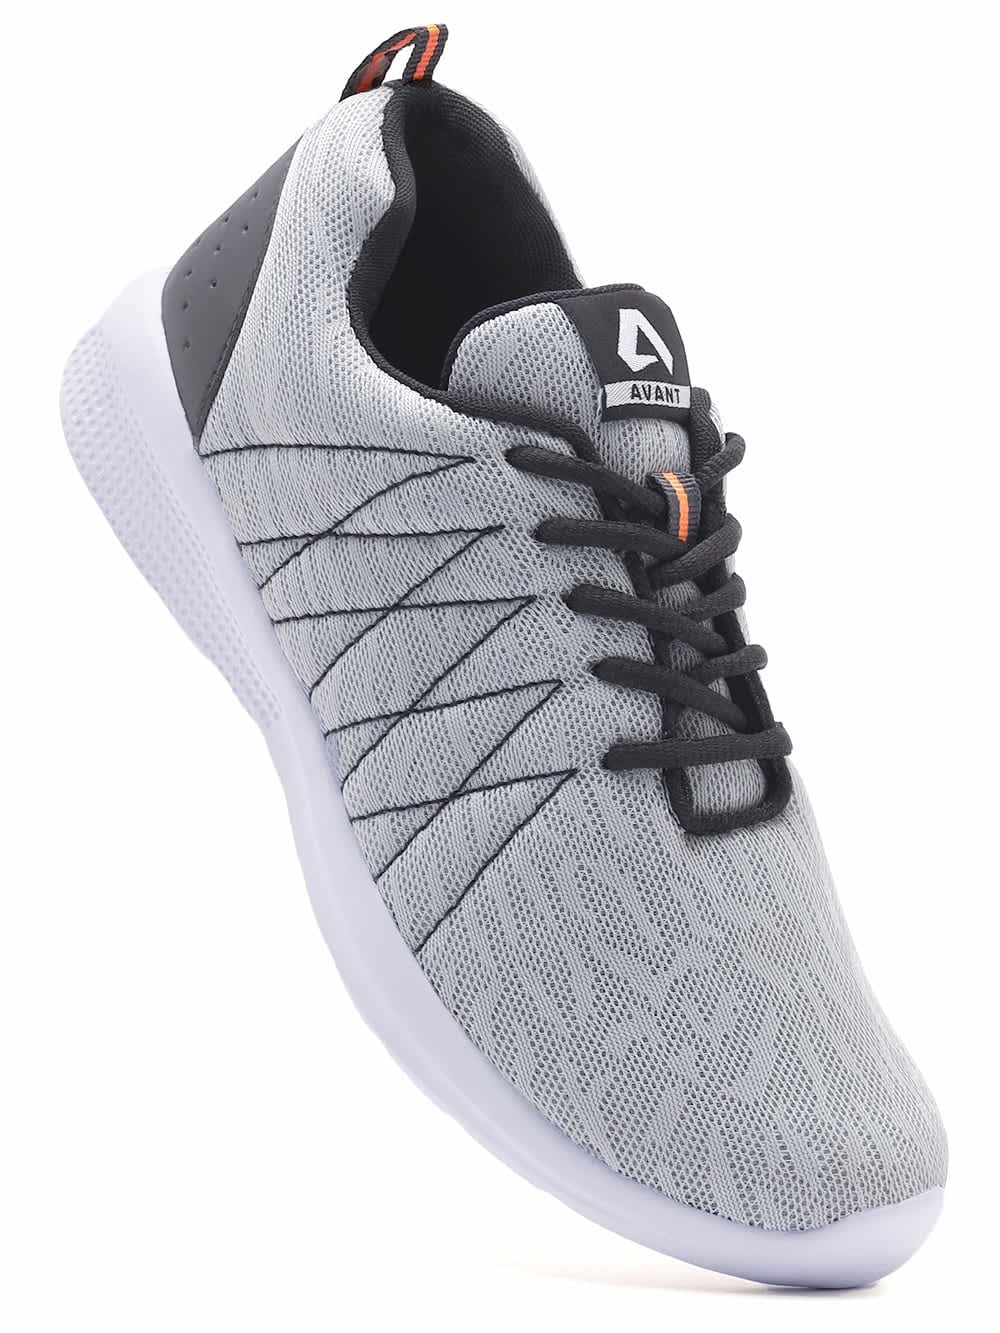 Buy Avant Men's Ultra Light Running and Training Shoes - Grey | Cultsport